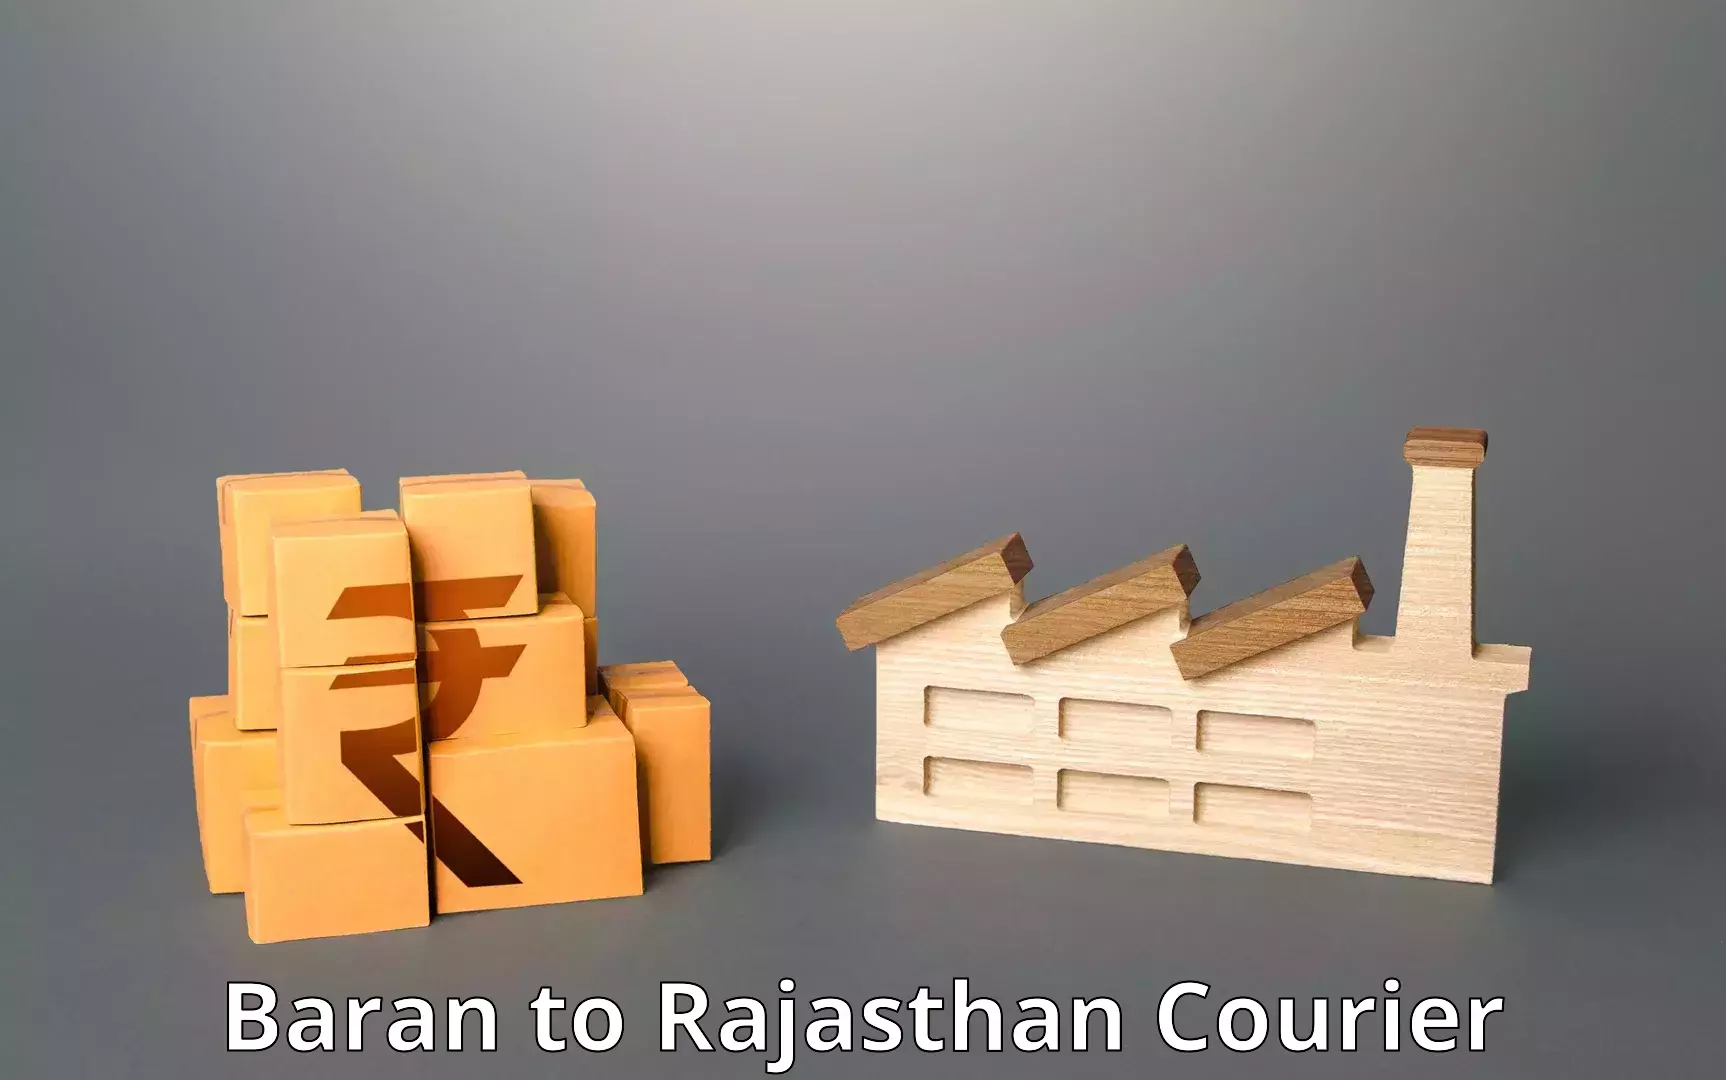 Logistics service provider Baran to Rajasthan